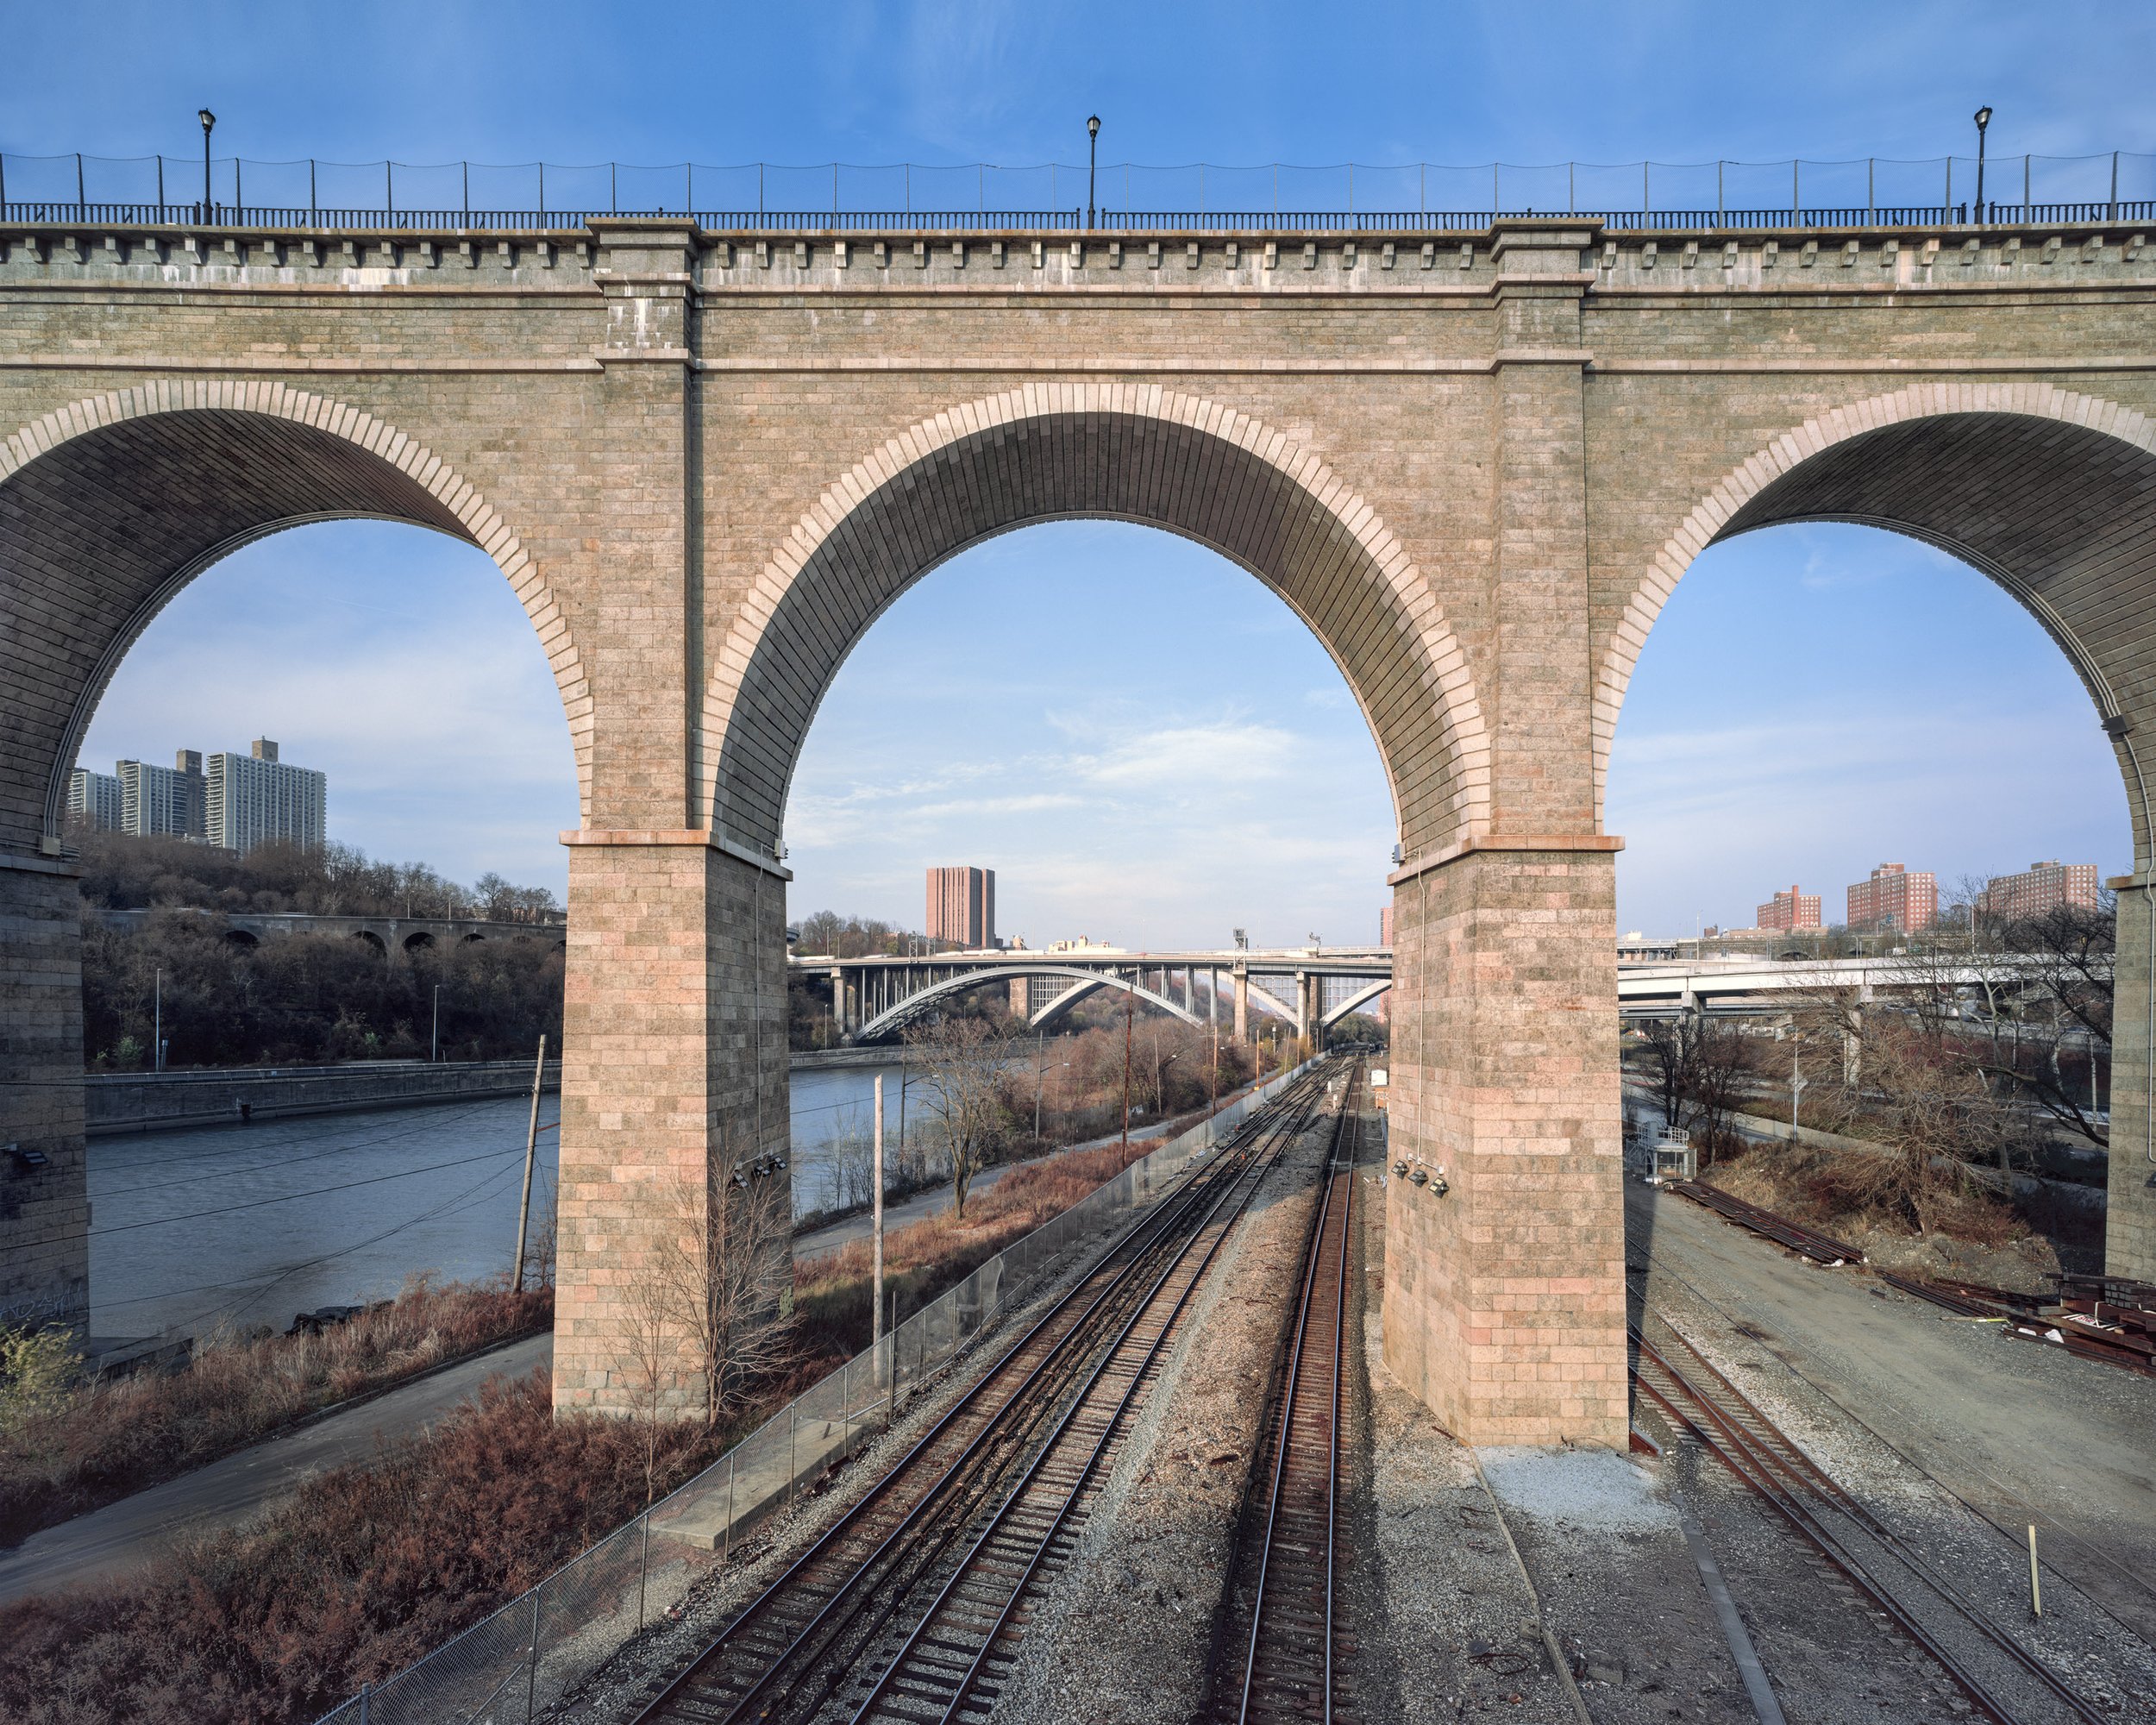 Highbridge and Tracks, Harlem River, New York City